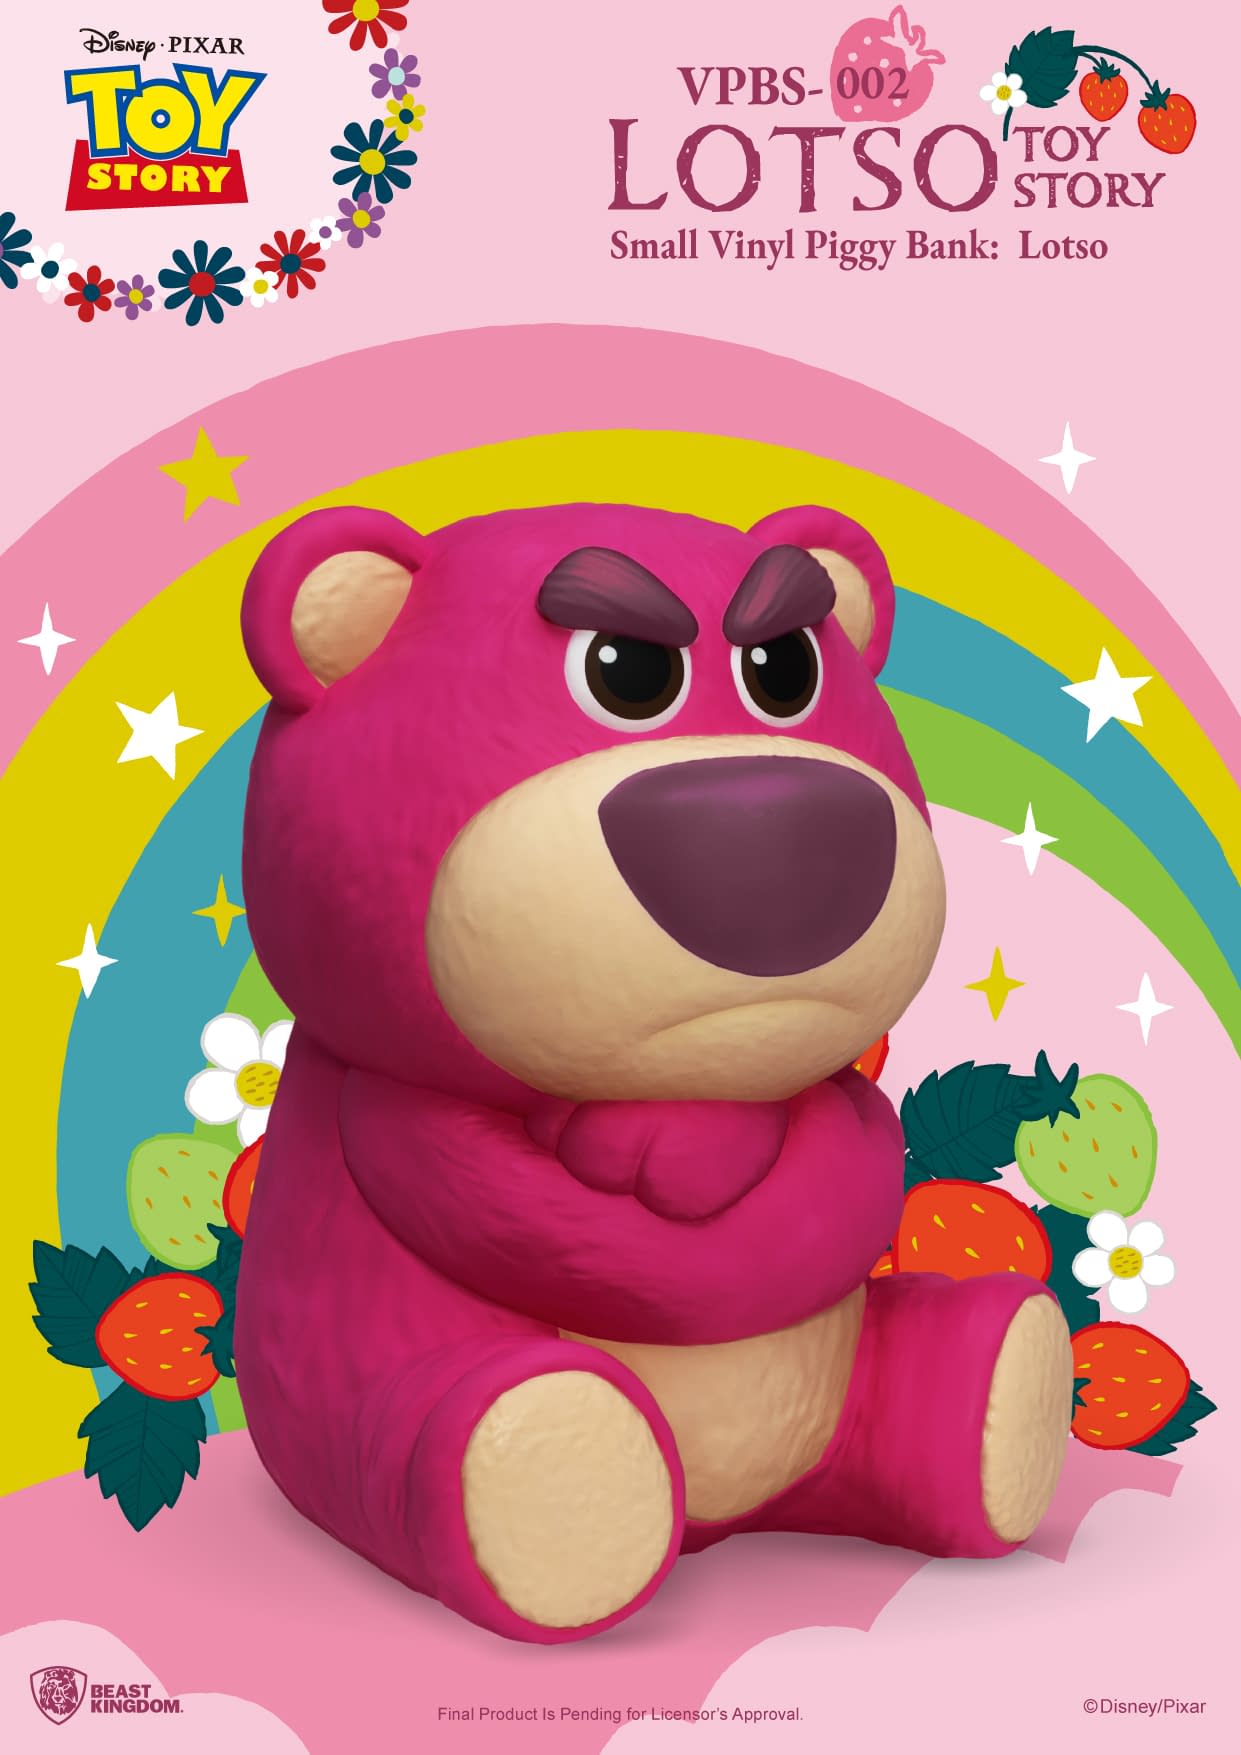 Beware the Bears with Beast Kingdom's New Disney Vinyl Piggy Banks2